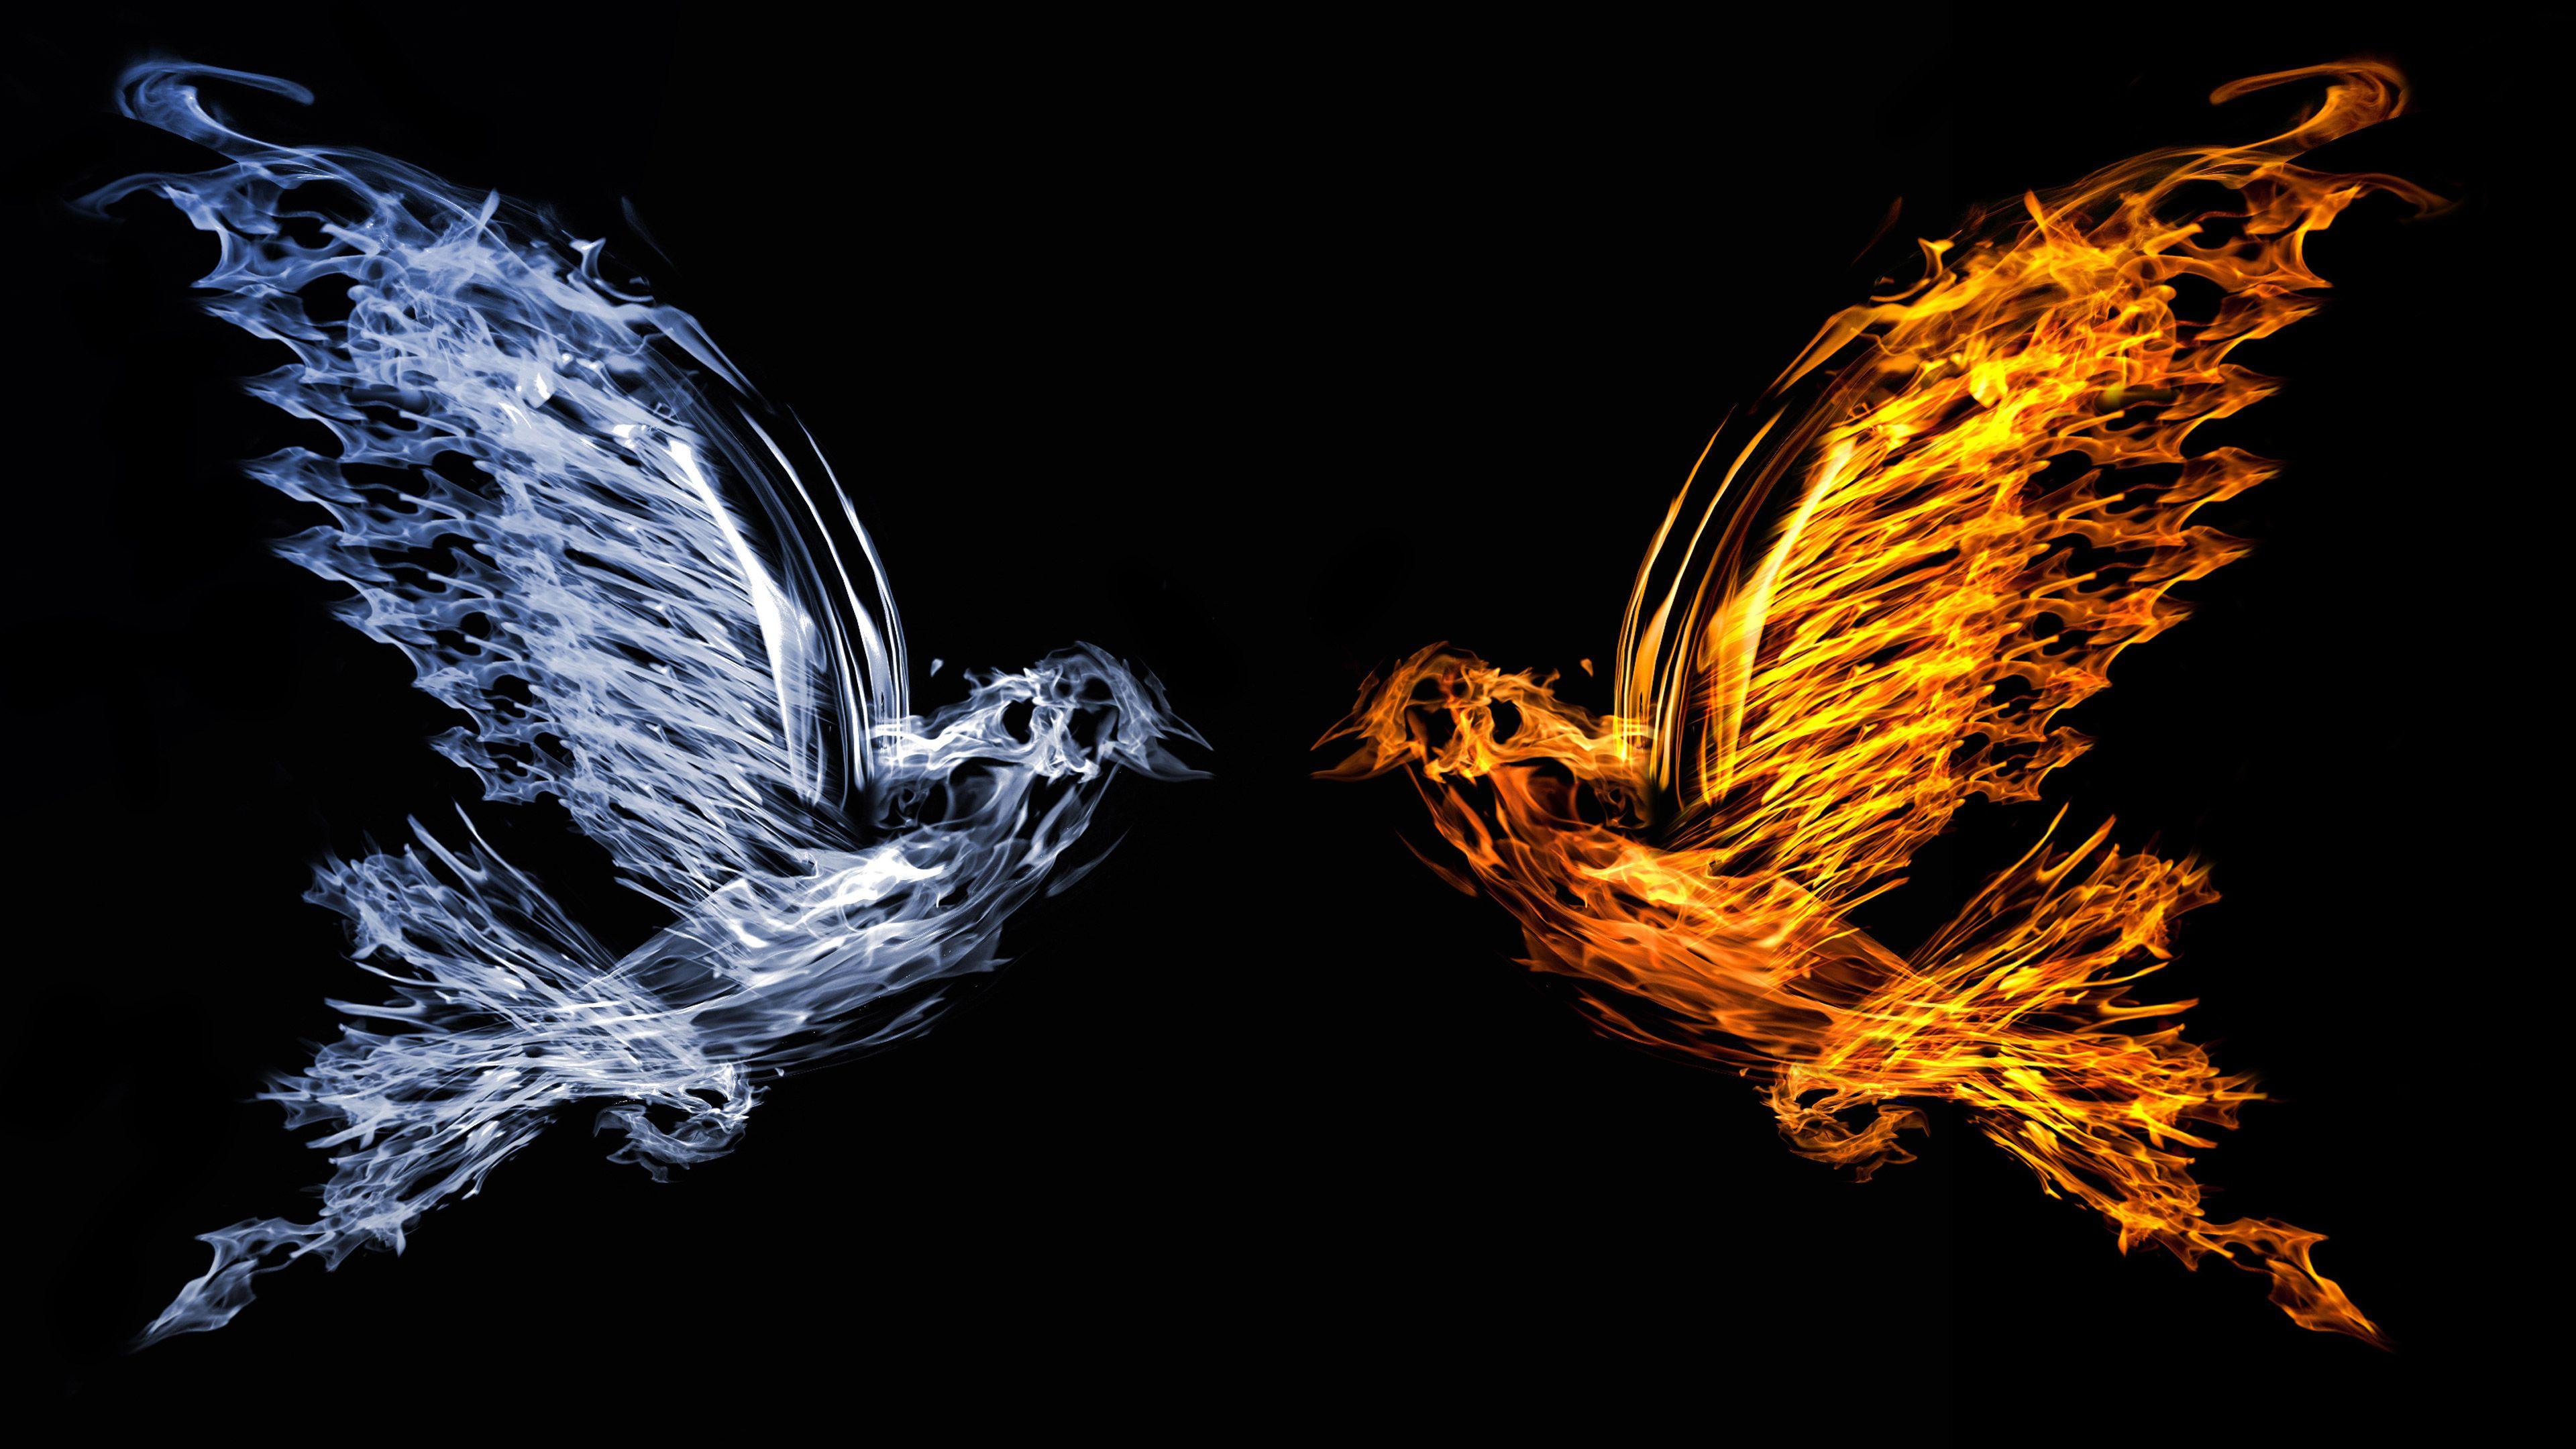 Bird Fire And Water, HD Artist, 4k Wallpaper, Image, Background